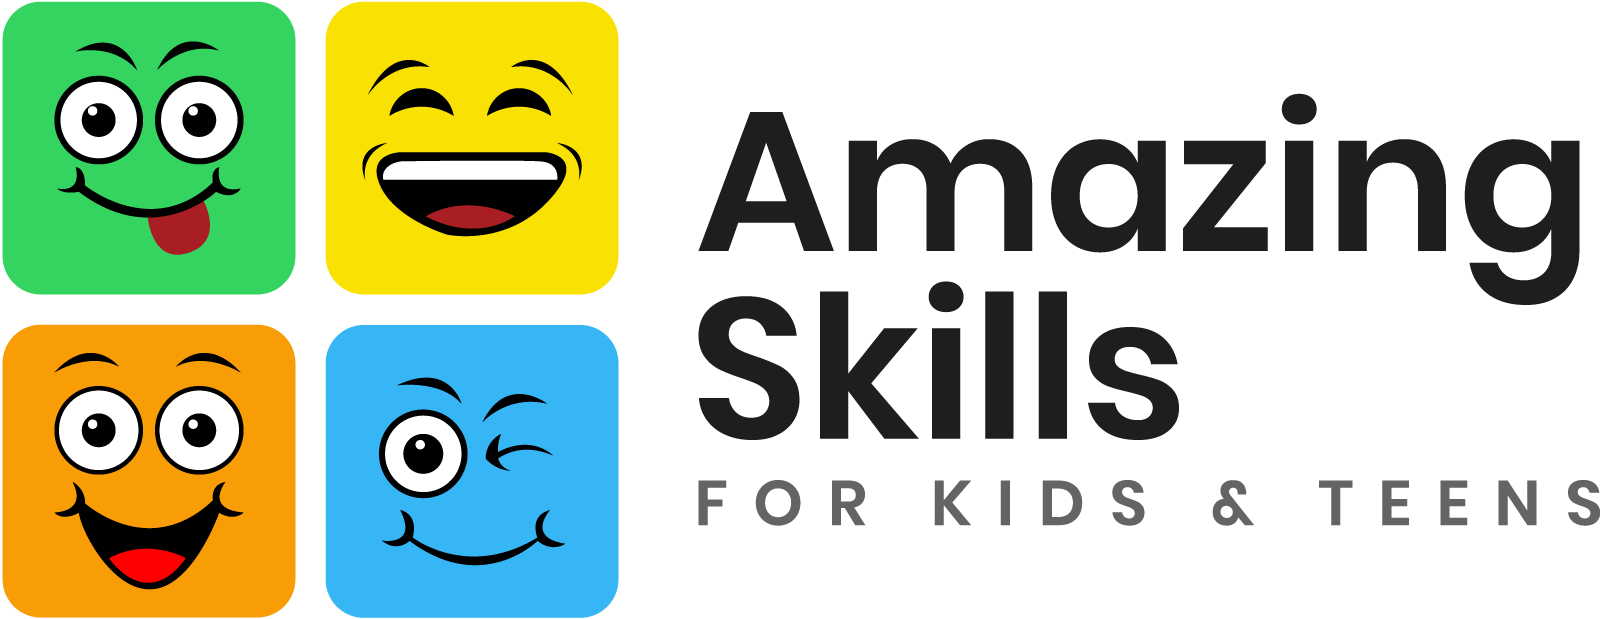 Amazing Skills For Kids & Teens